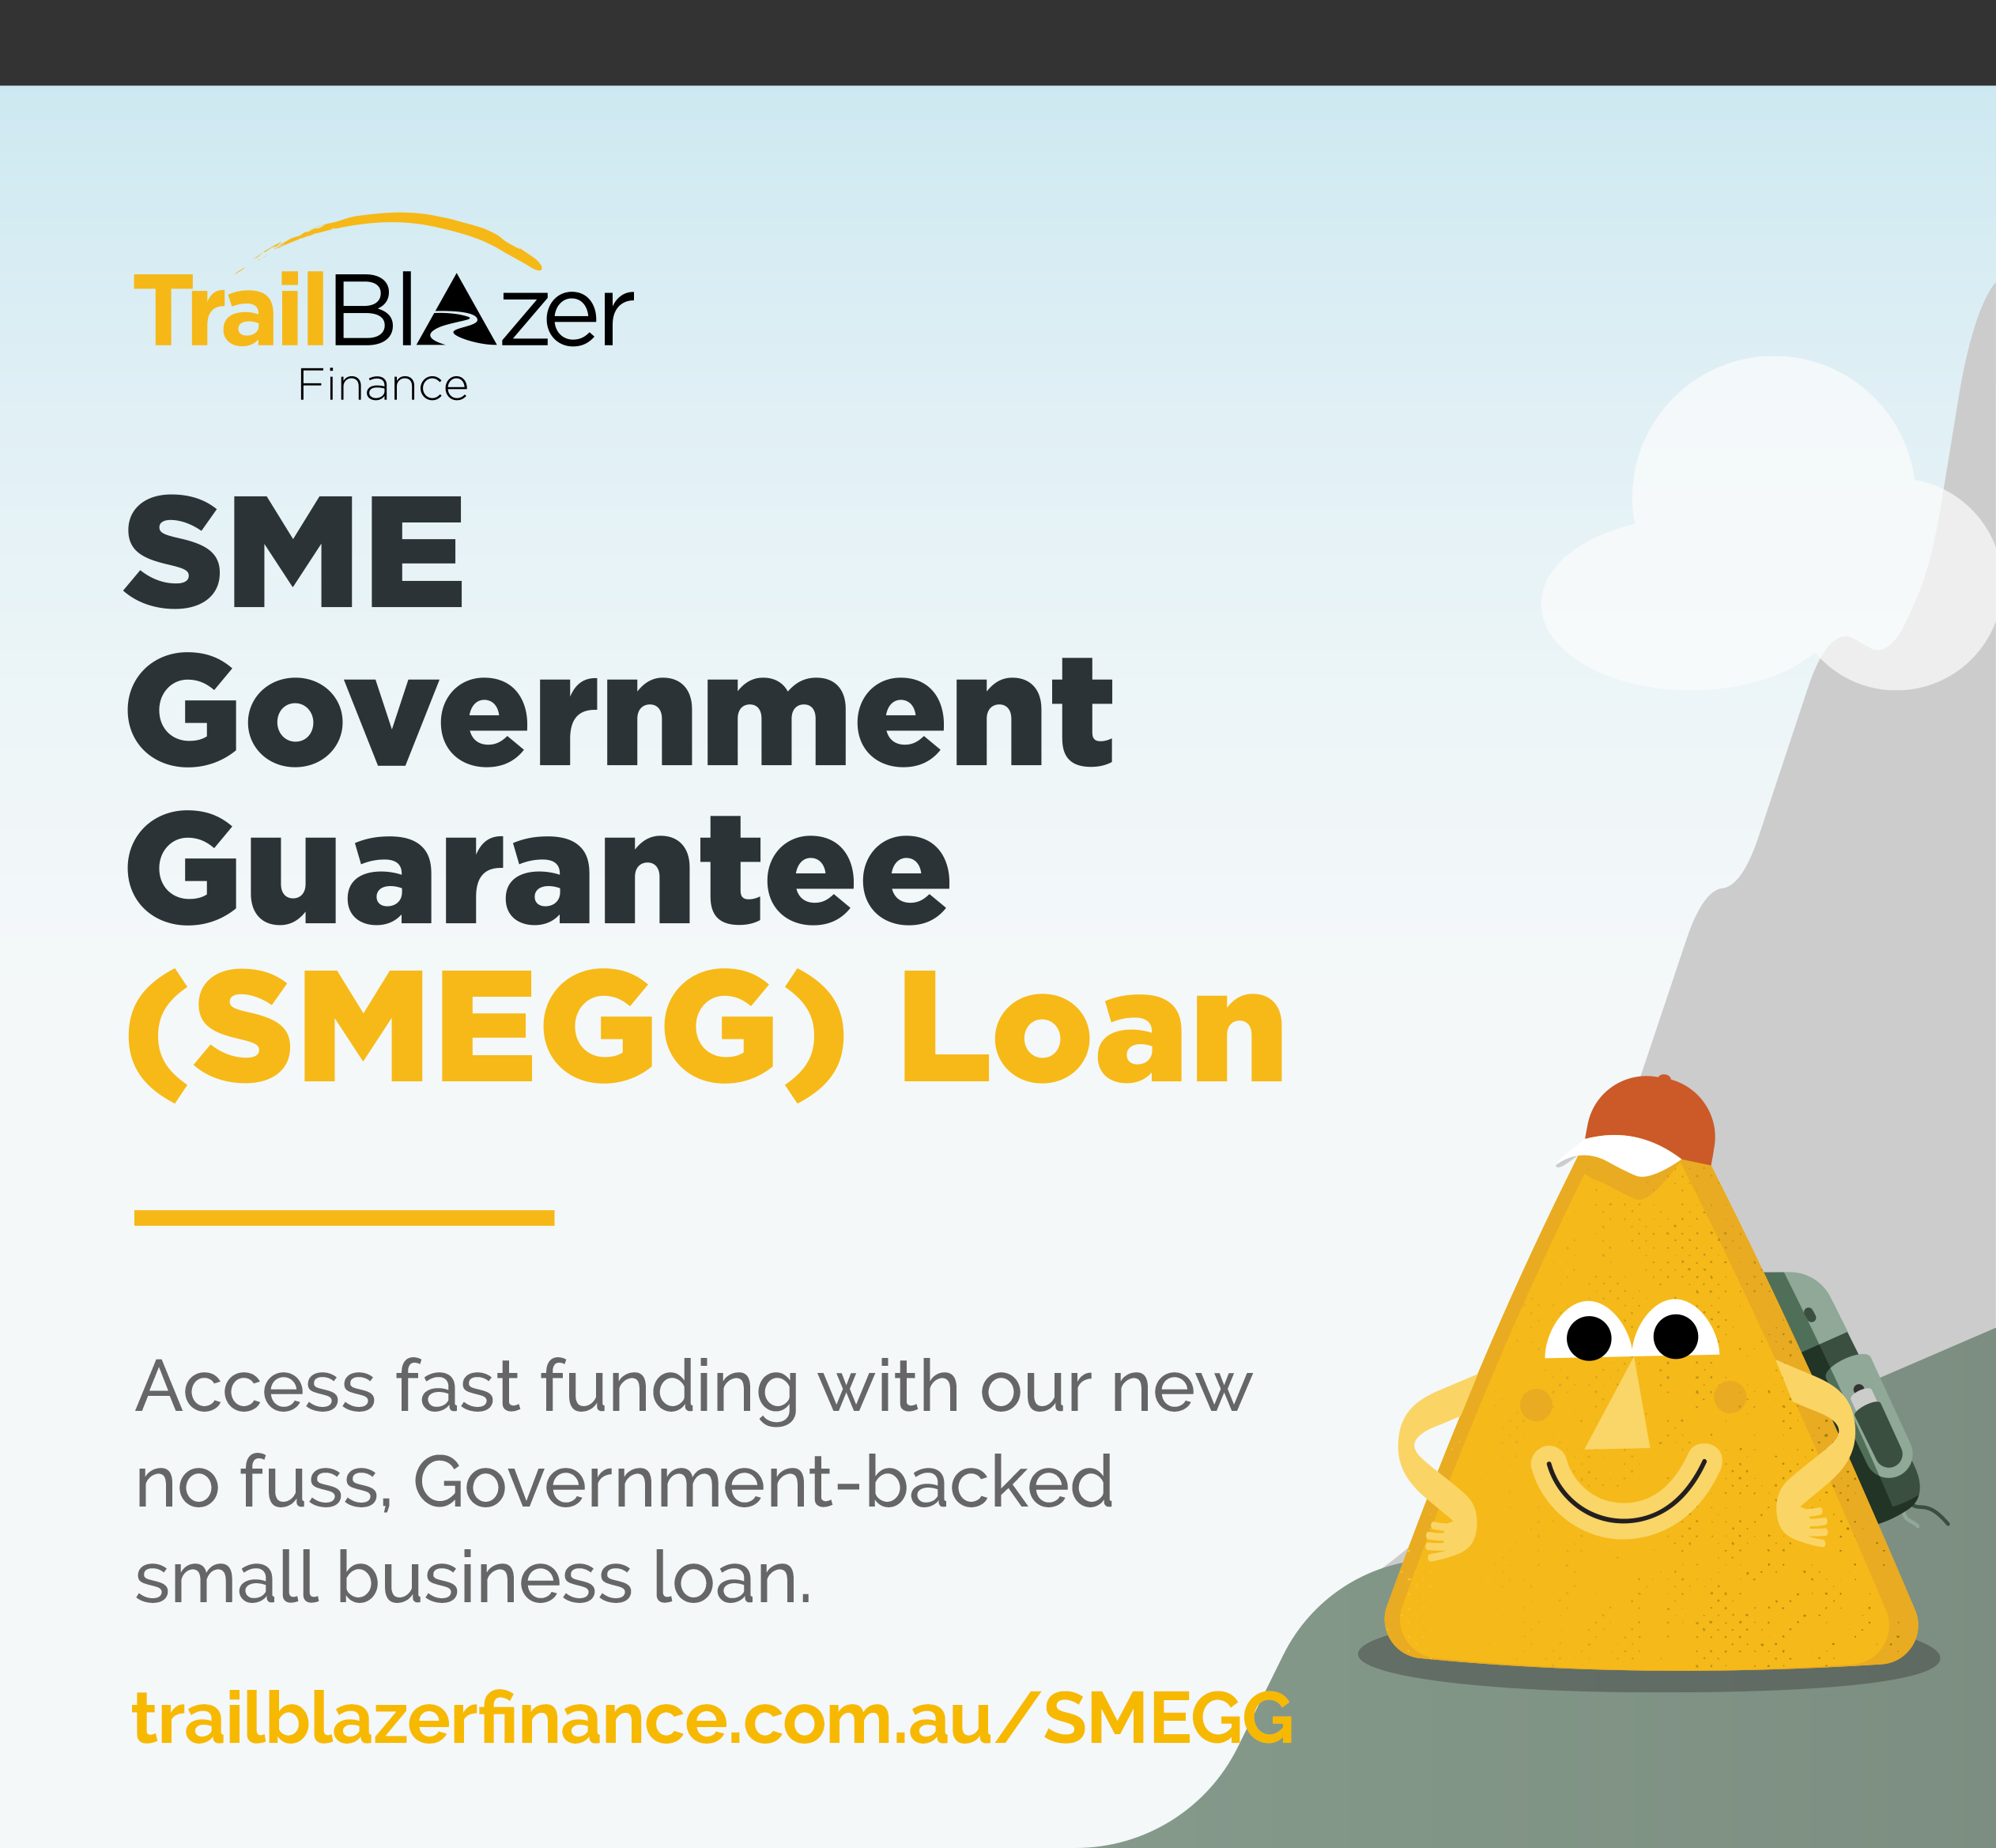 SME Government Guarantee Loan